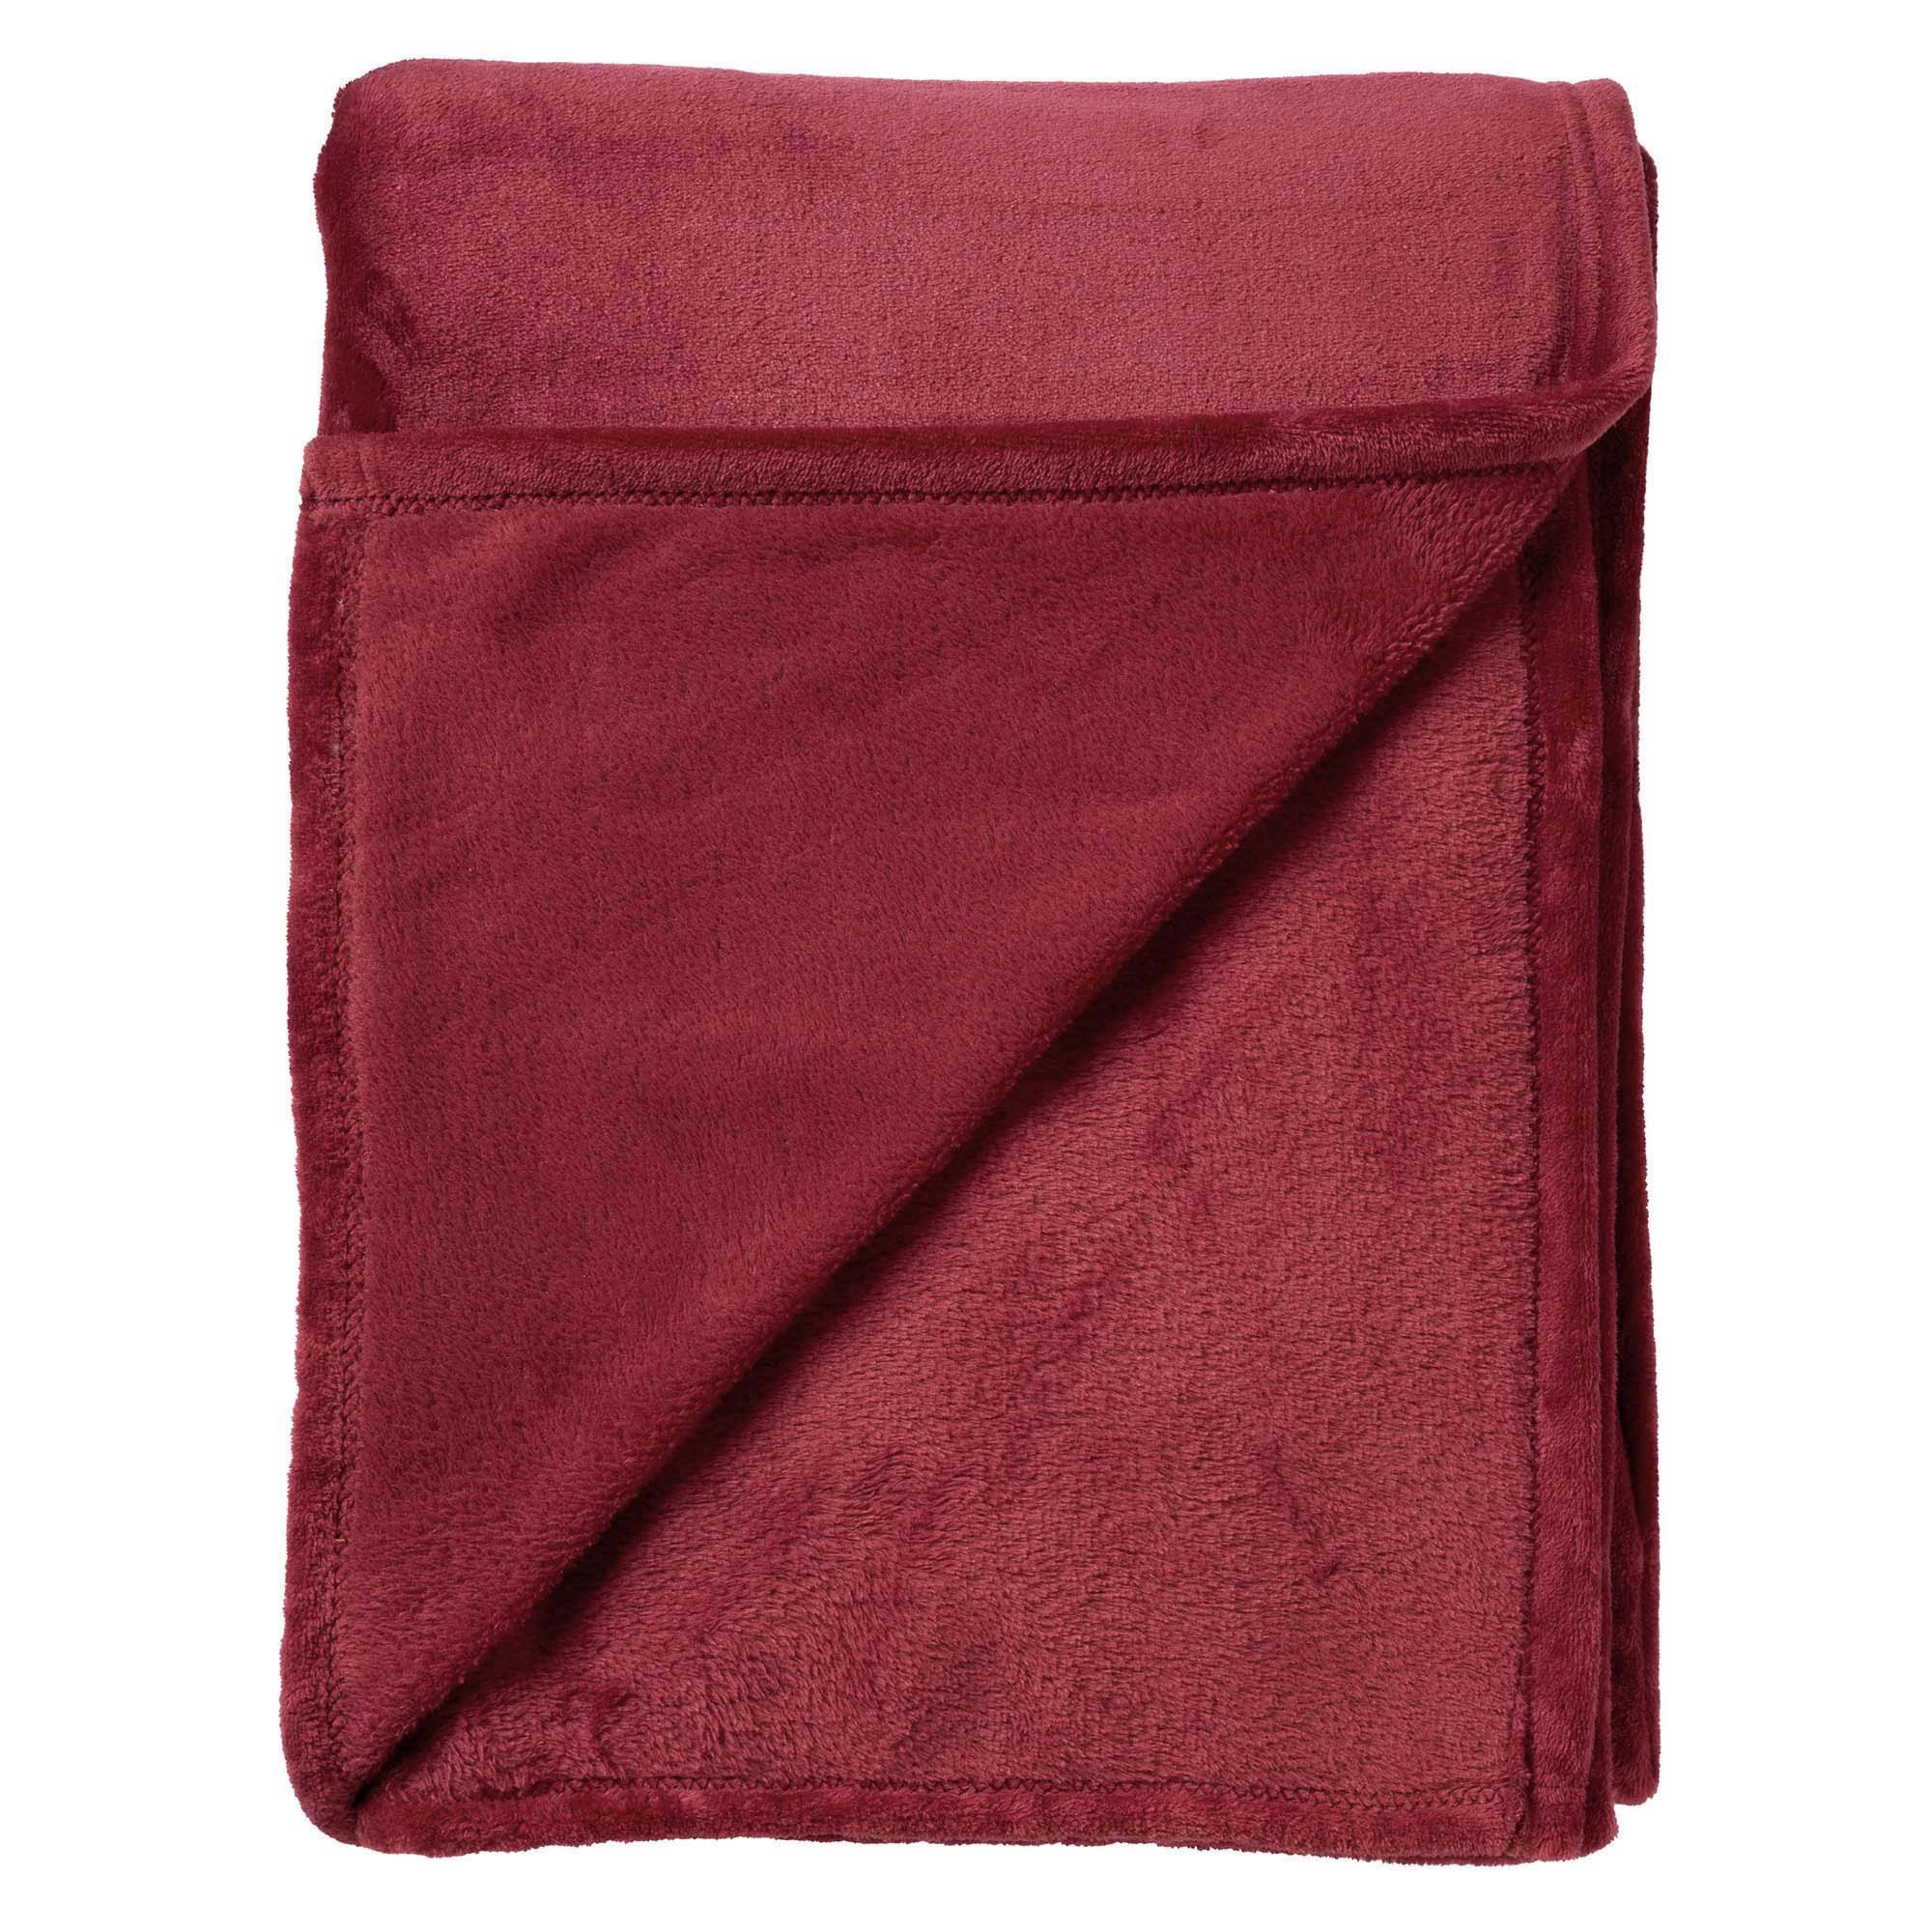 BILLY - Plaid 150x200 cm - flannel fleece - superzacht - Merlot - rood bordeaux 